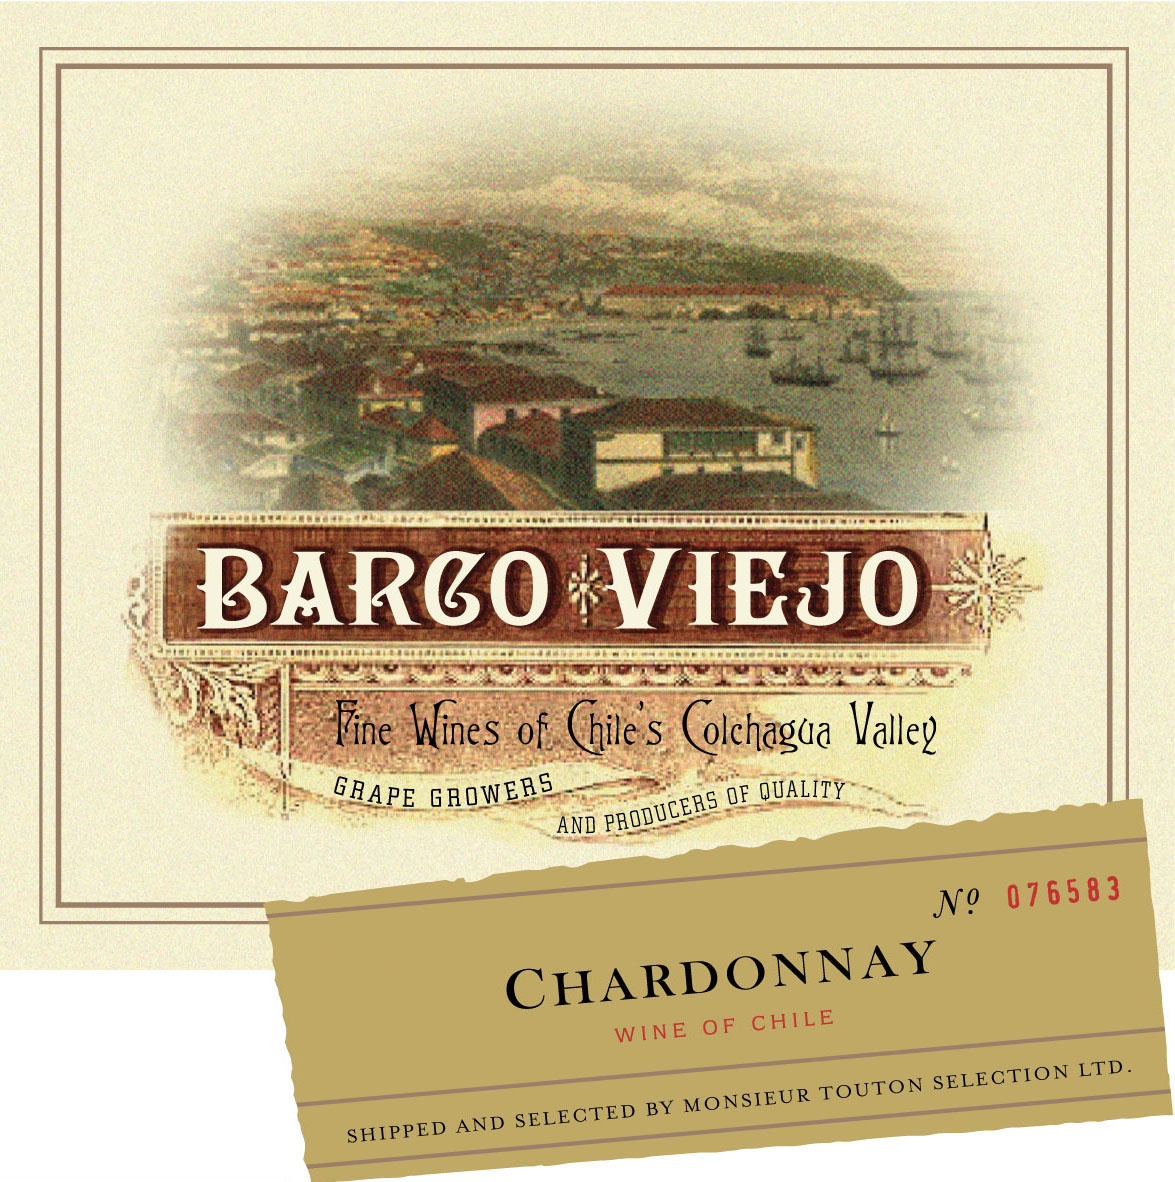 Barco Viejo - Chardonnay label